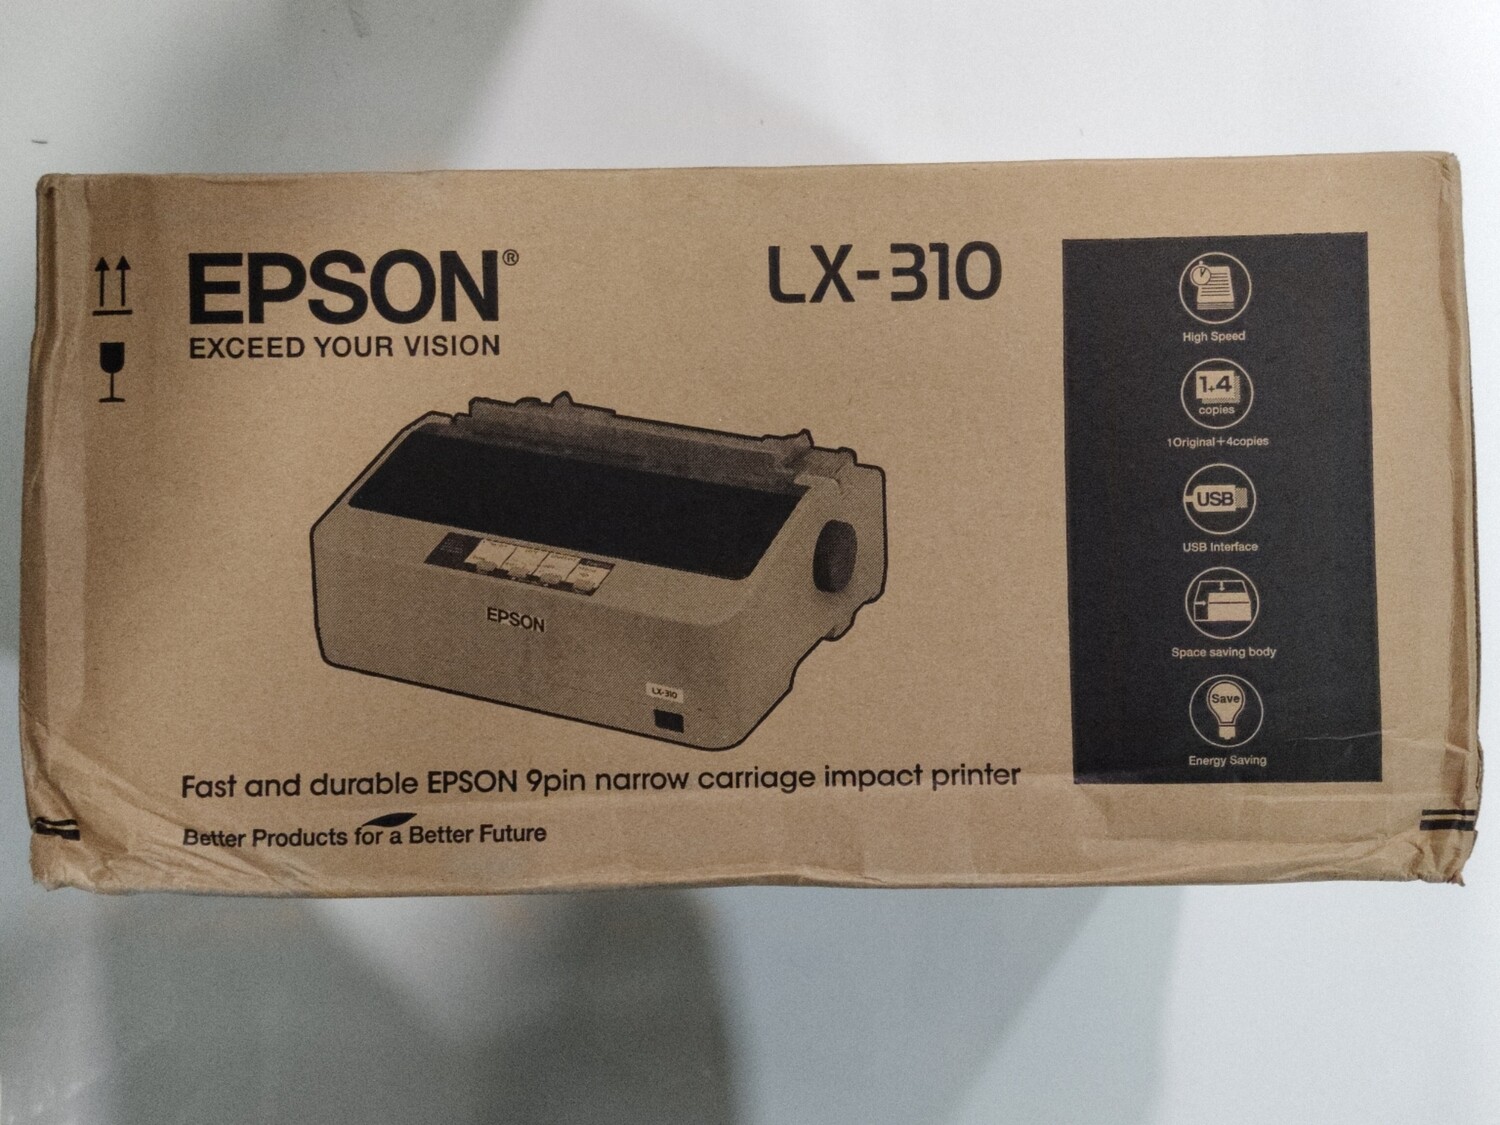 Epson LX-310 Impact Dot Matrix Printer – Rs.10950 – LT Online Store Mumbai  – (1.4k LIVE Videos) ©2005 Trusted Store with 22k Customer Reviews